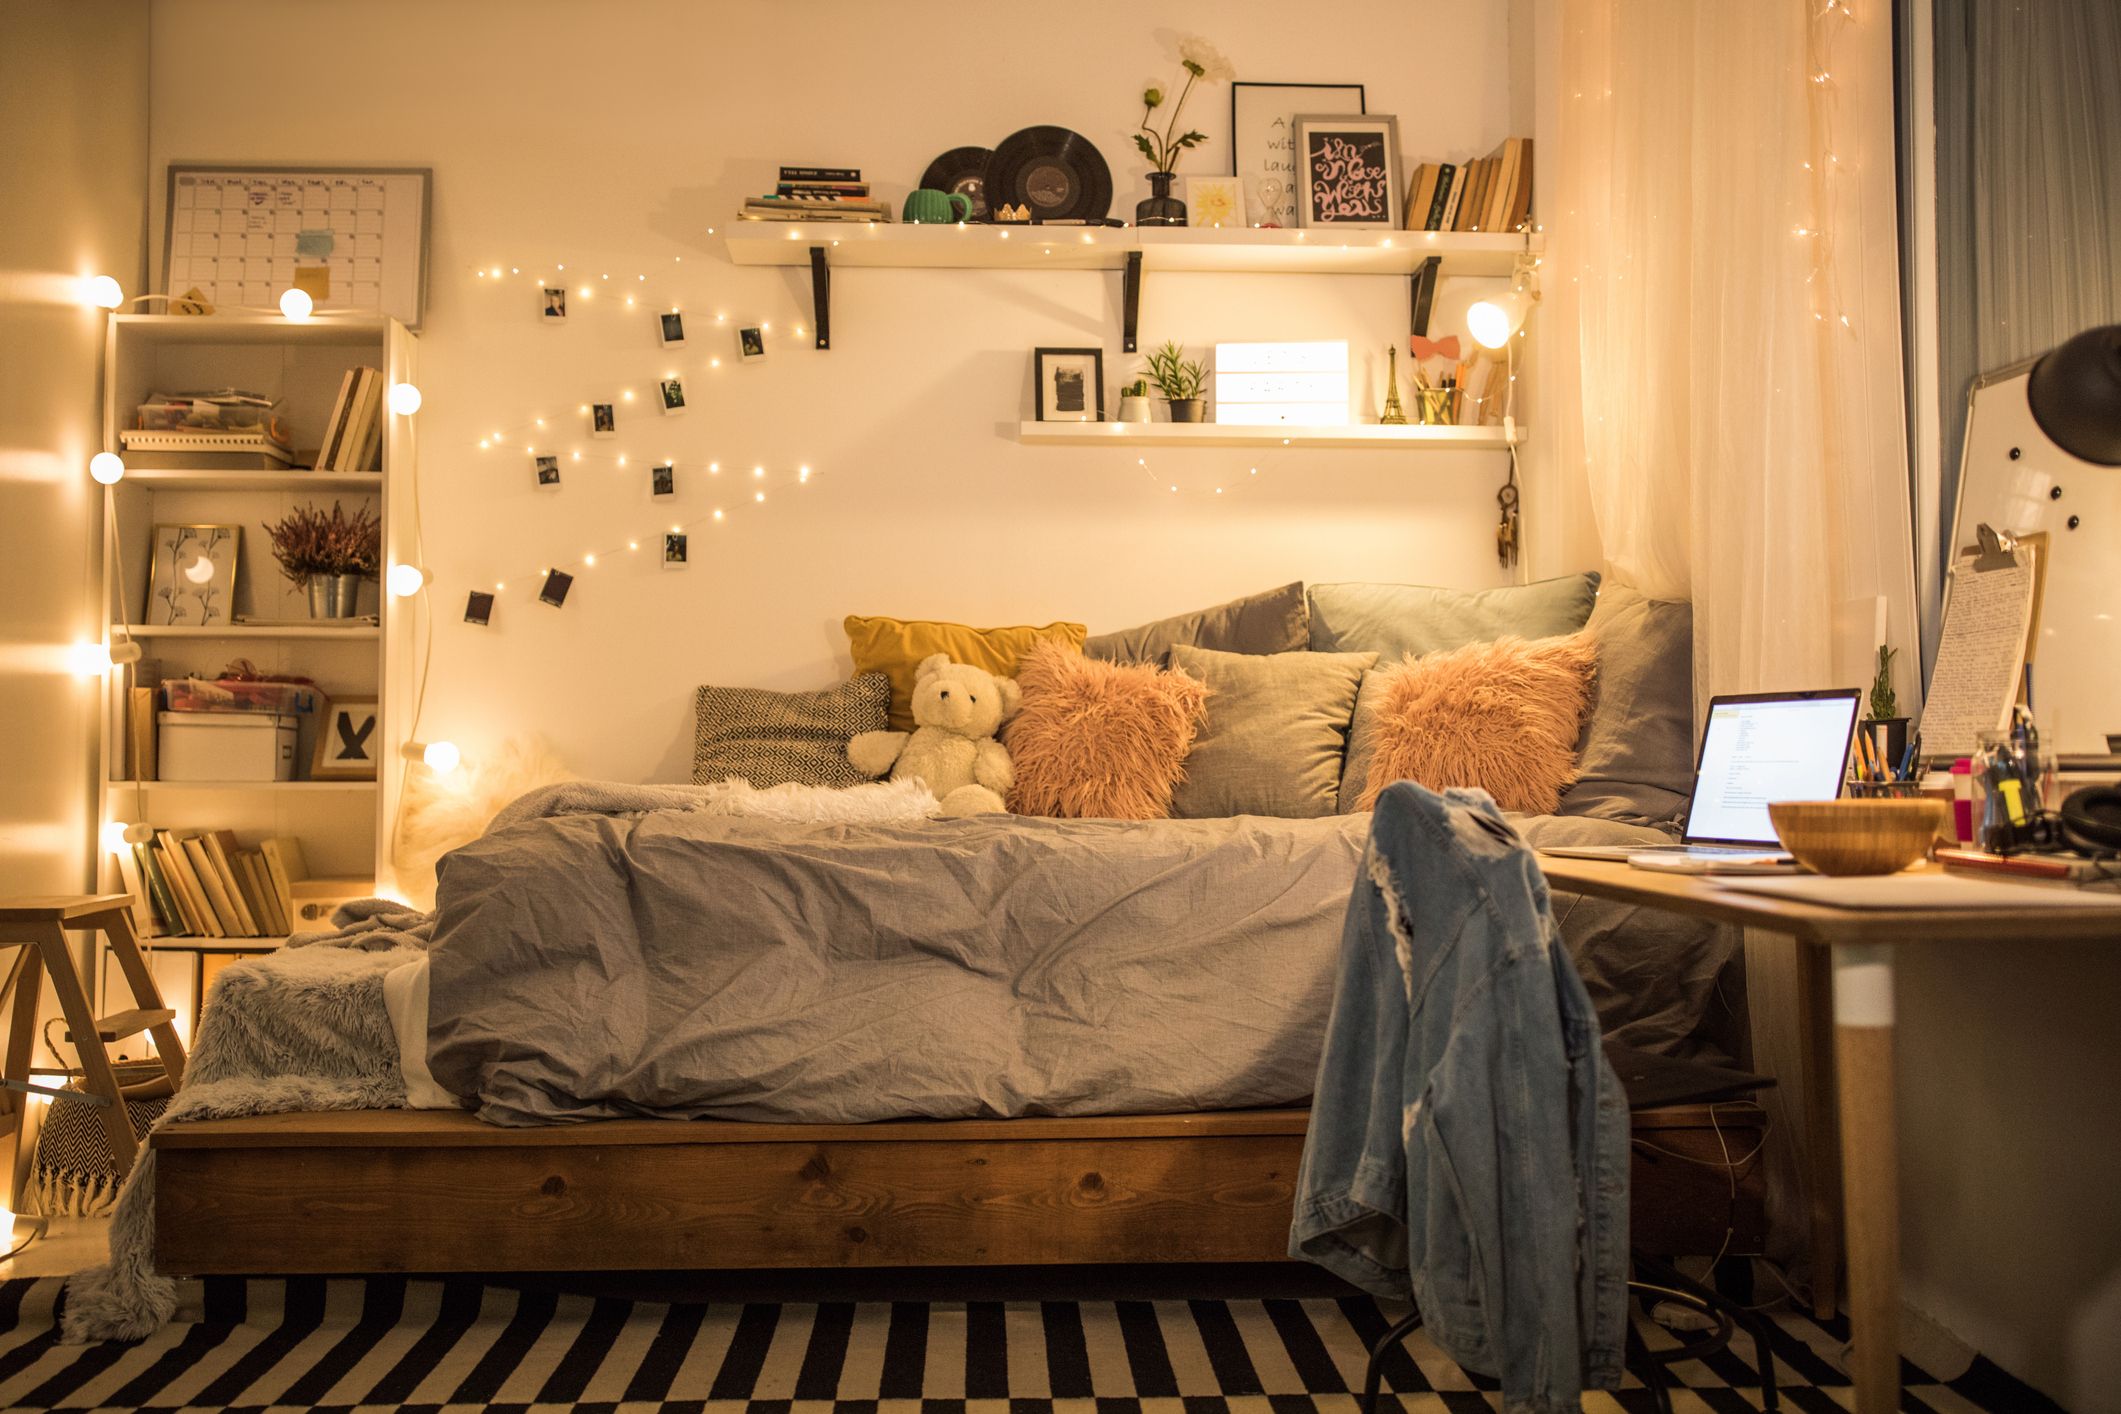 4 dorm room ideas and decor to make halls feel like home